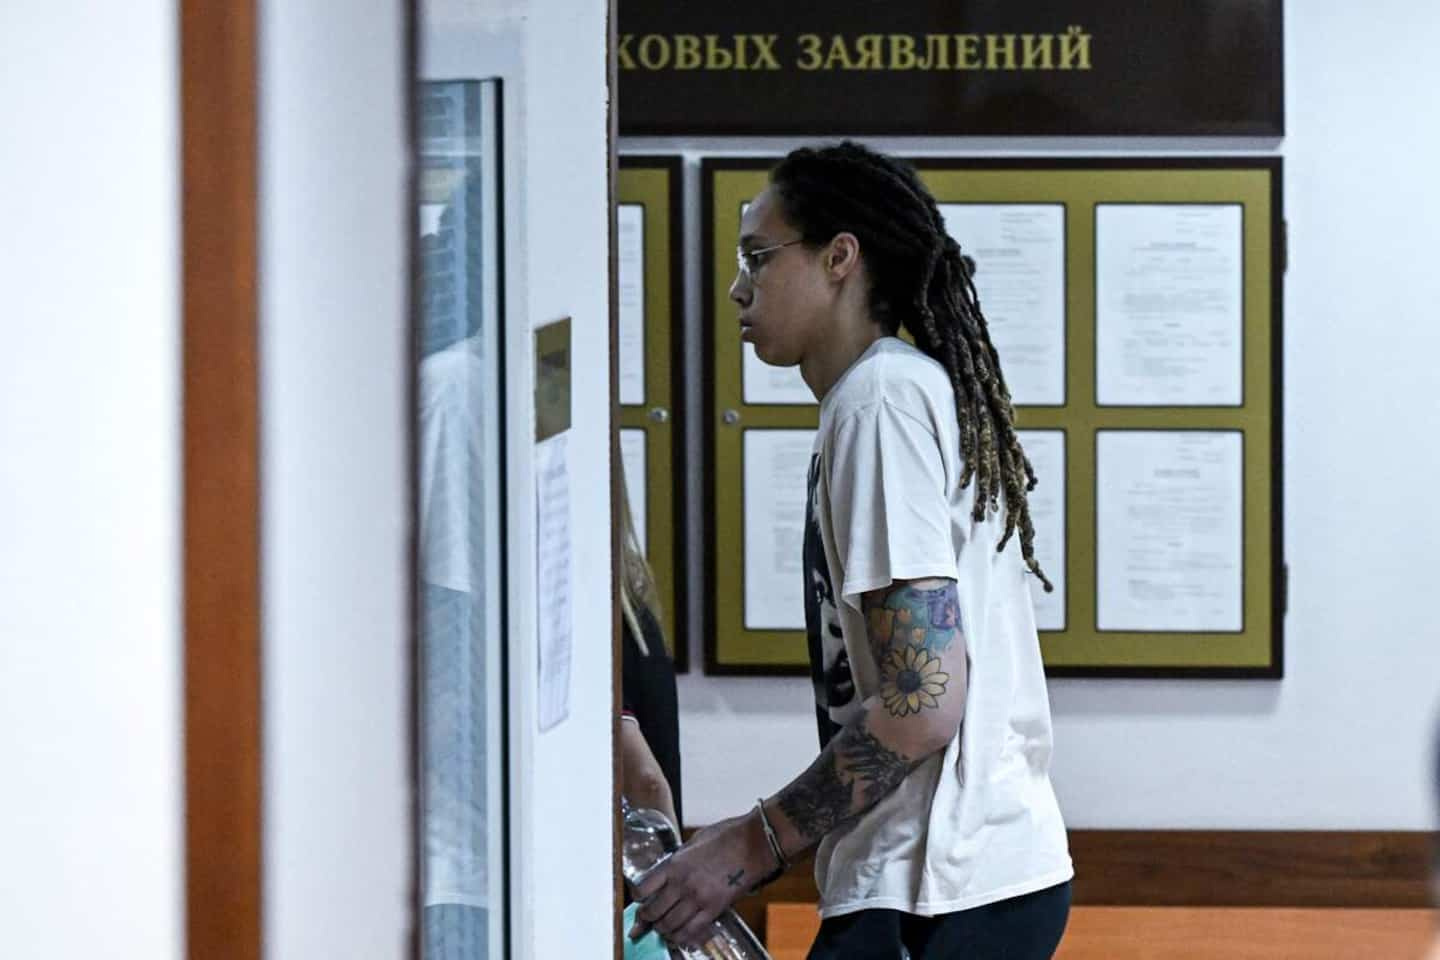 Basketball player imprisoned: Russia denounces American "public hype"